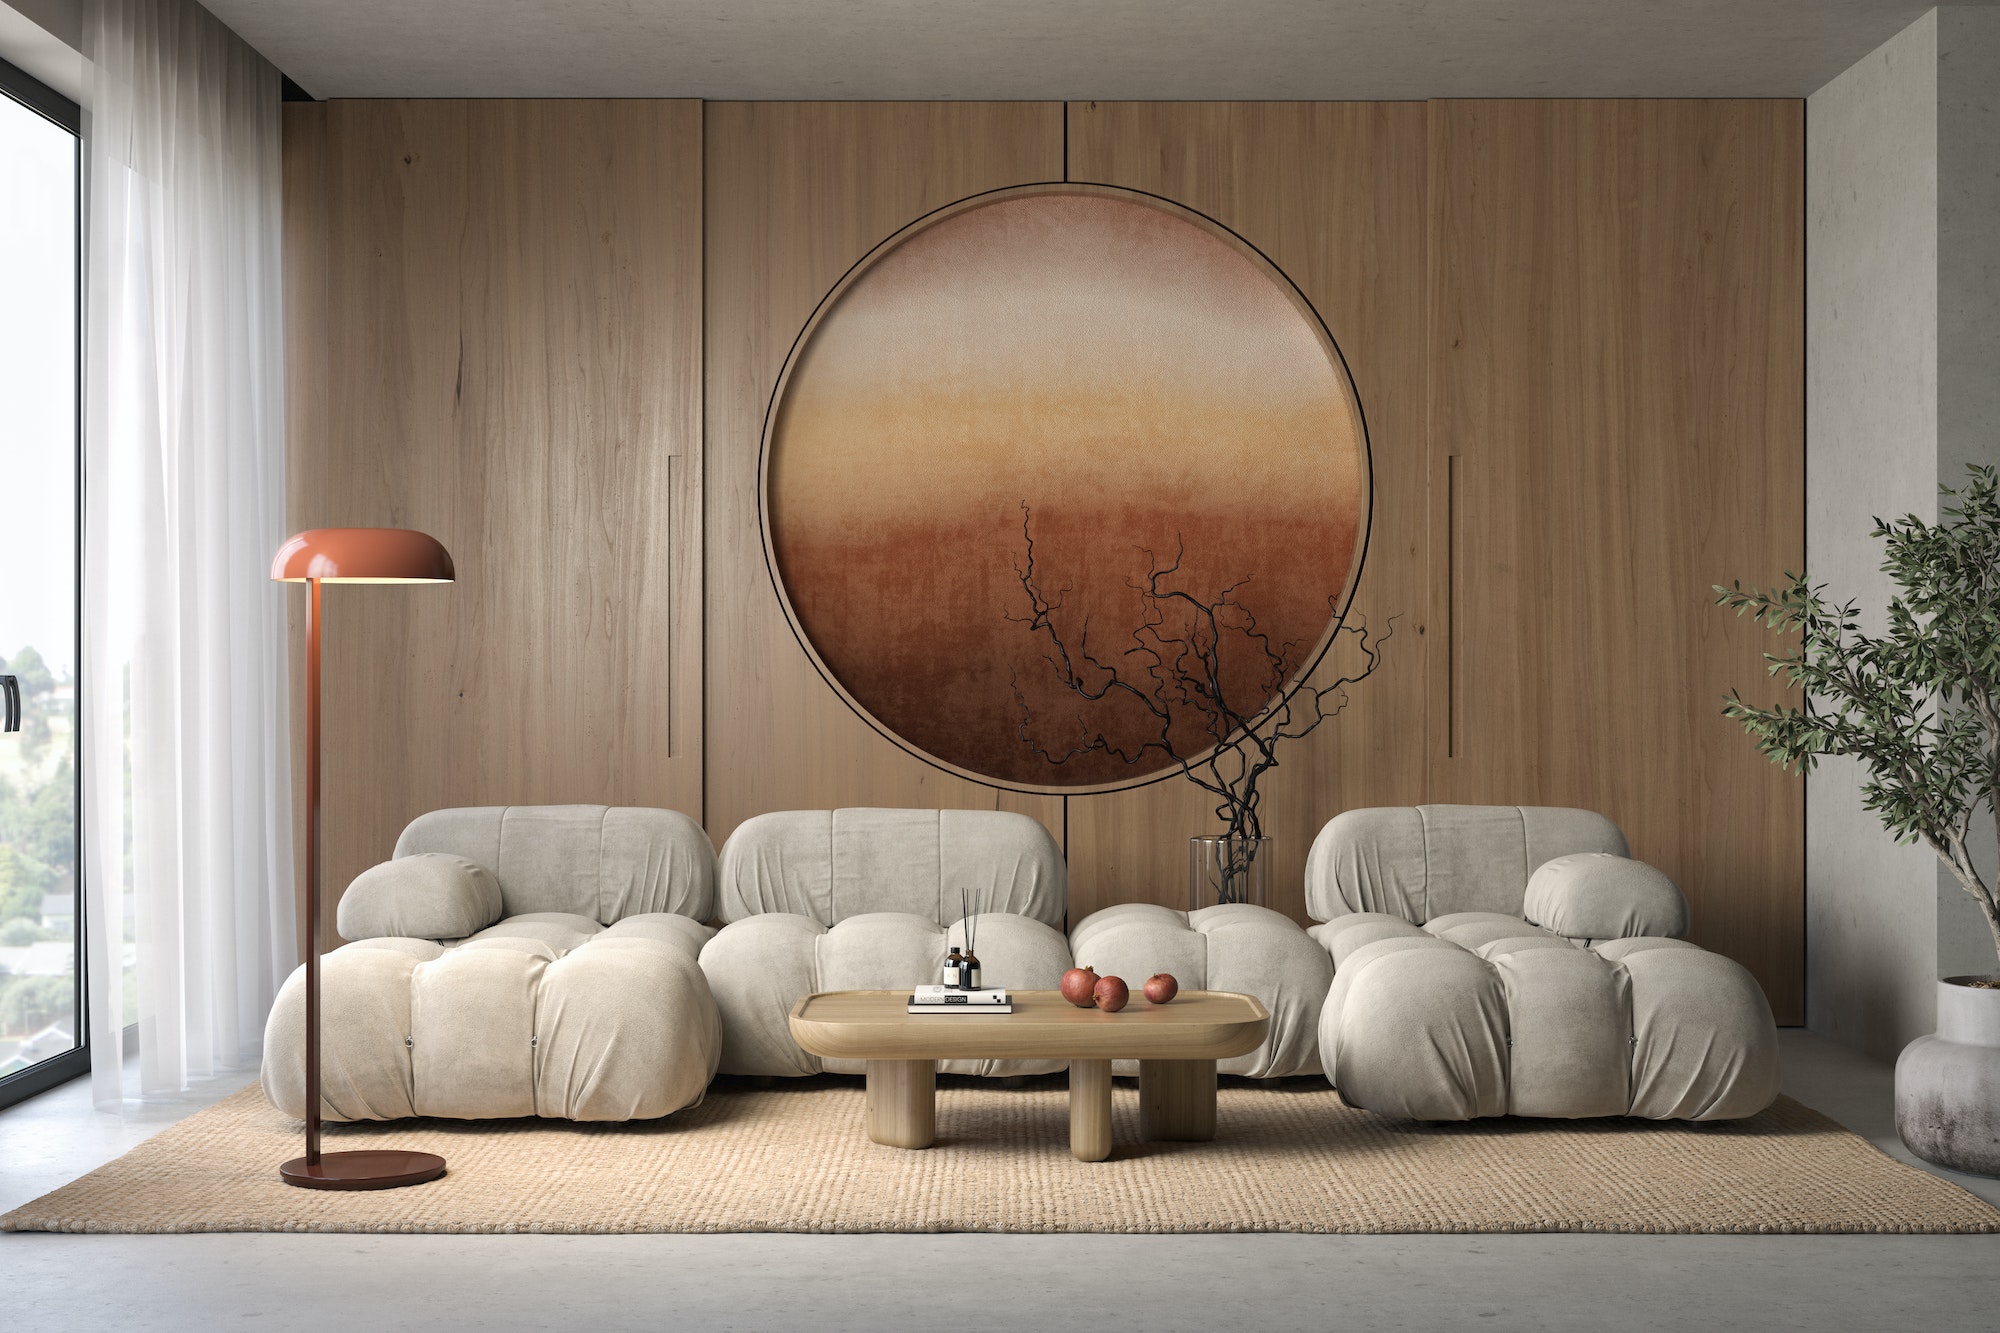 Japandi style conceptual interior room